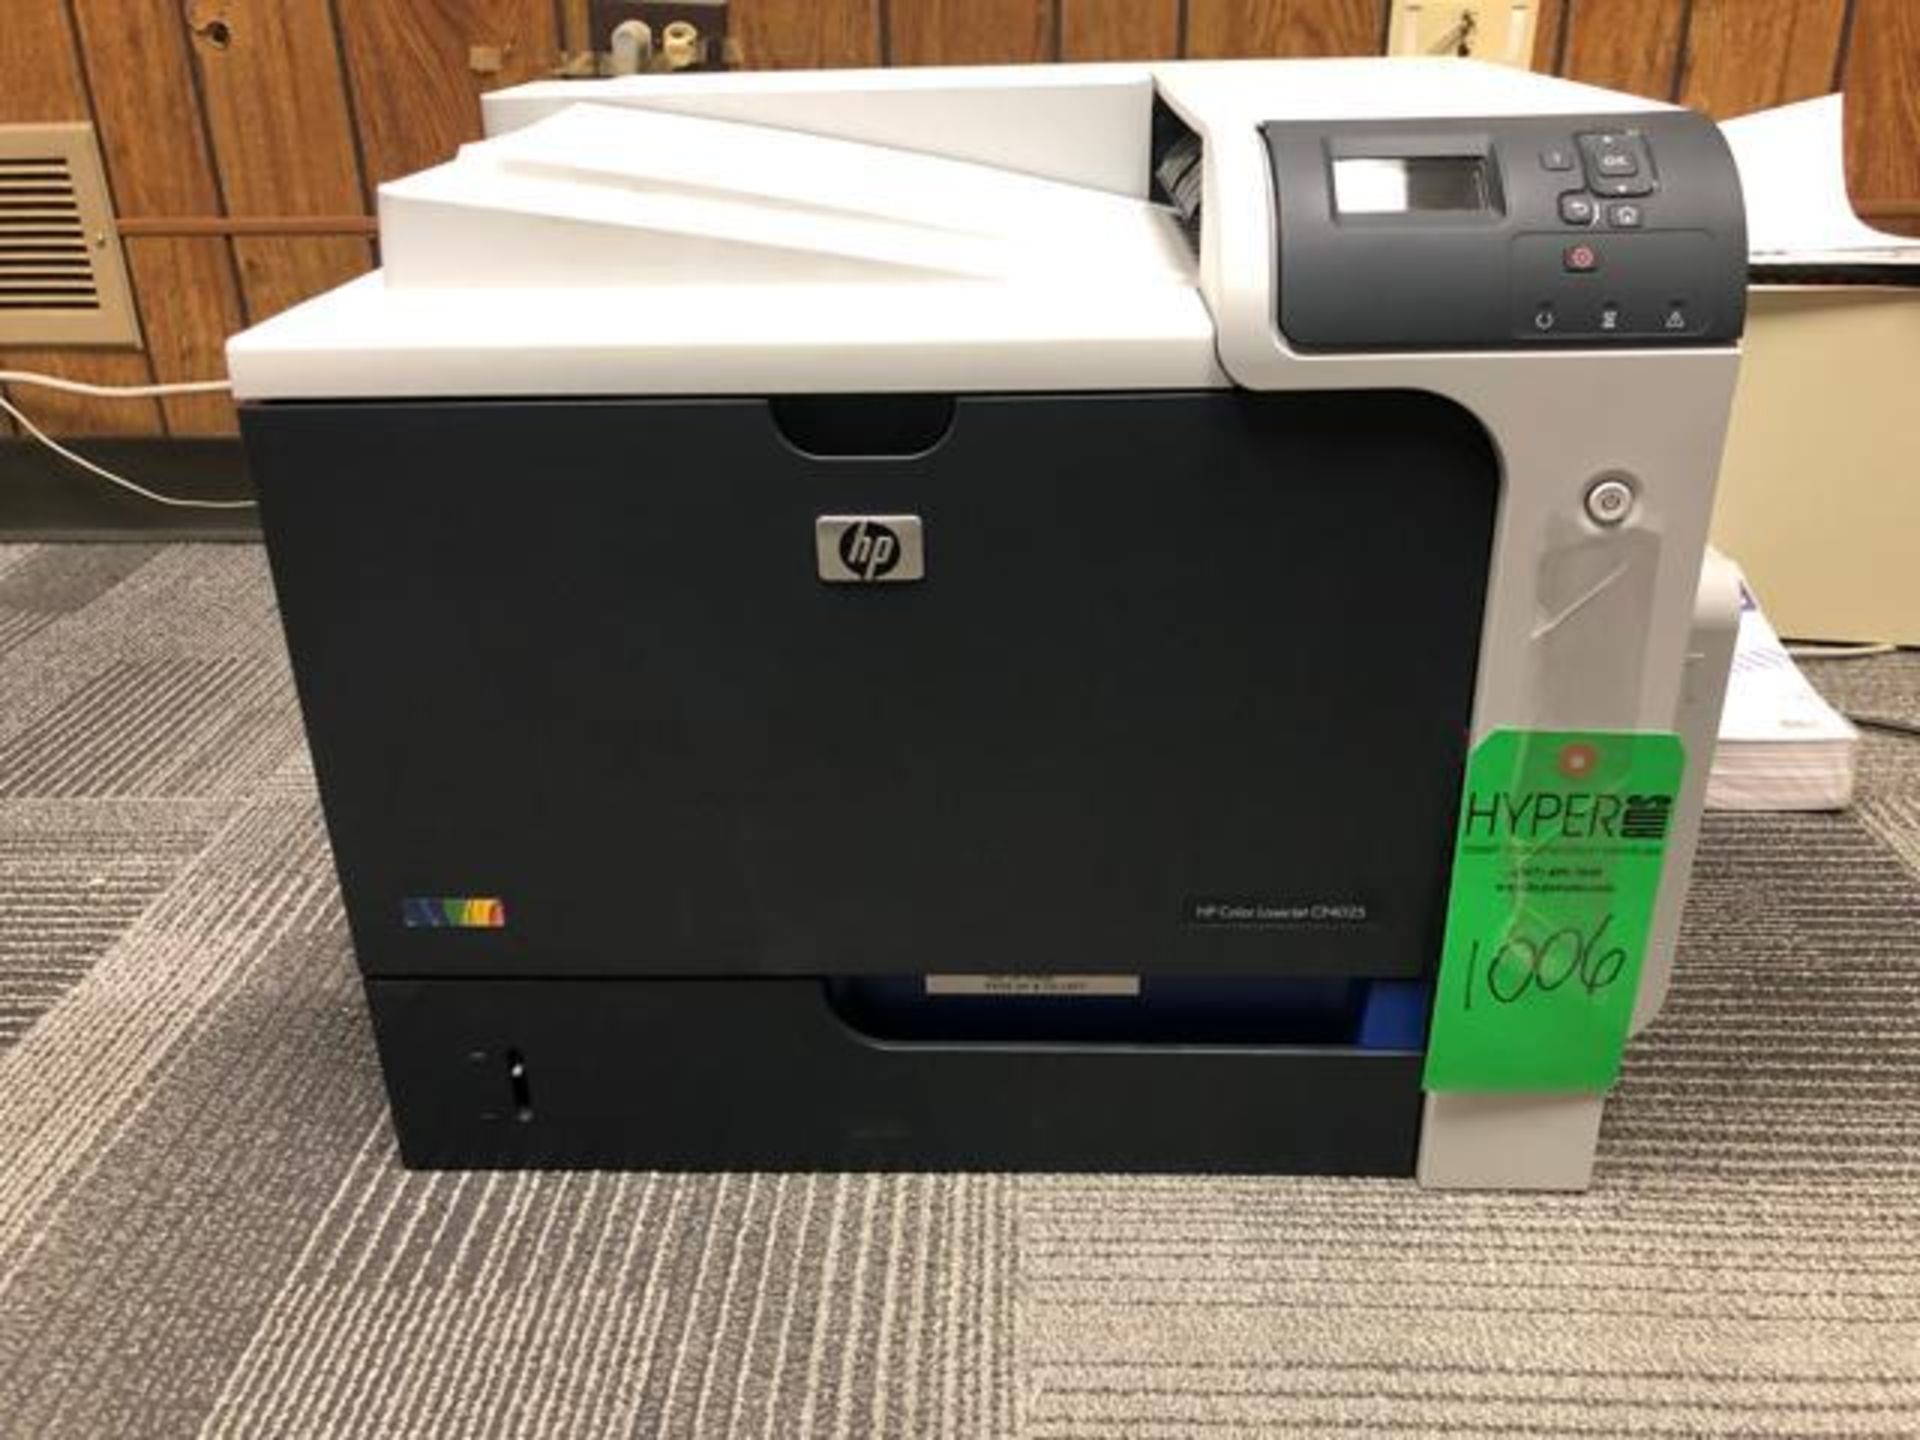 HP Model: CP4025 Color Laser Jet Printer